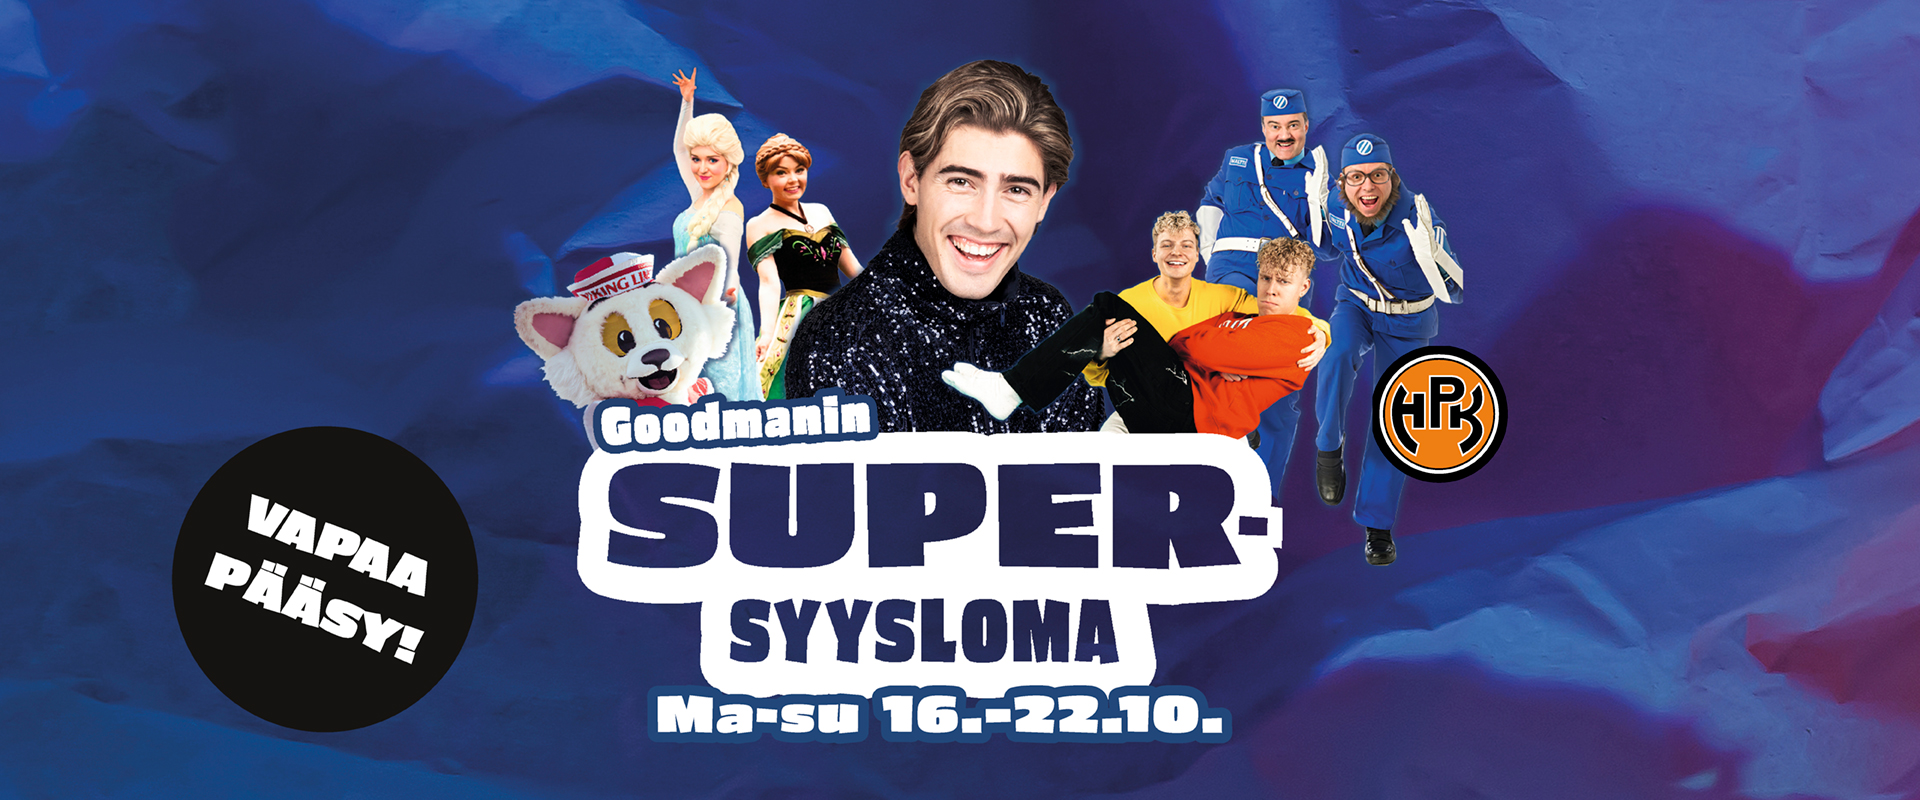 goodman supersyysloma